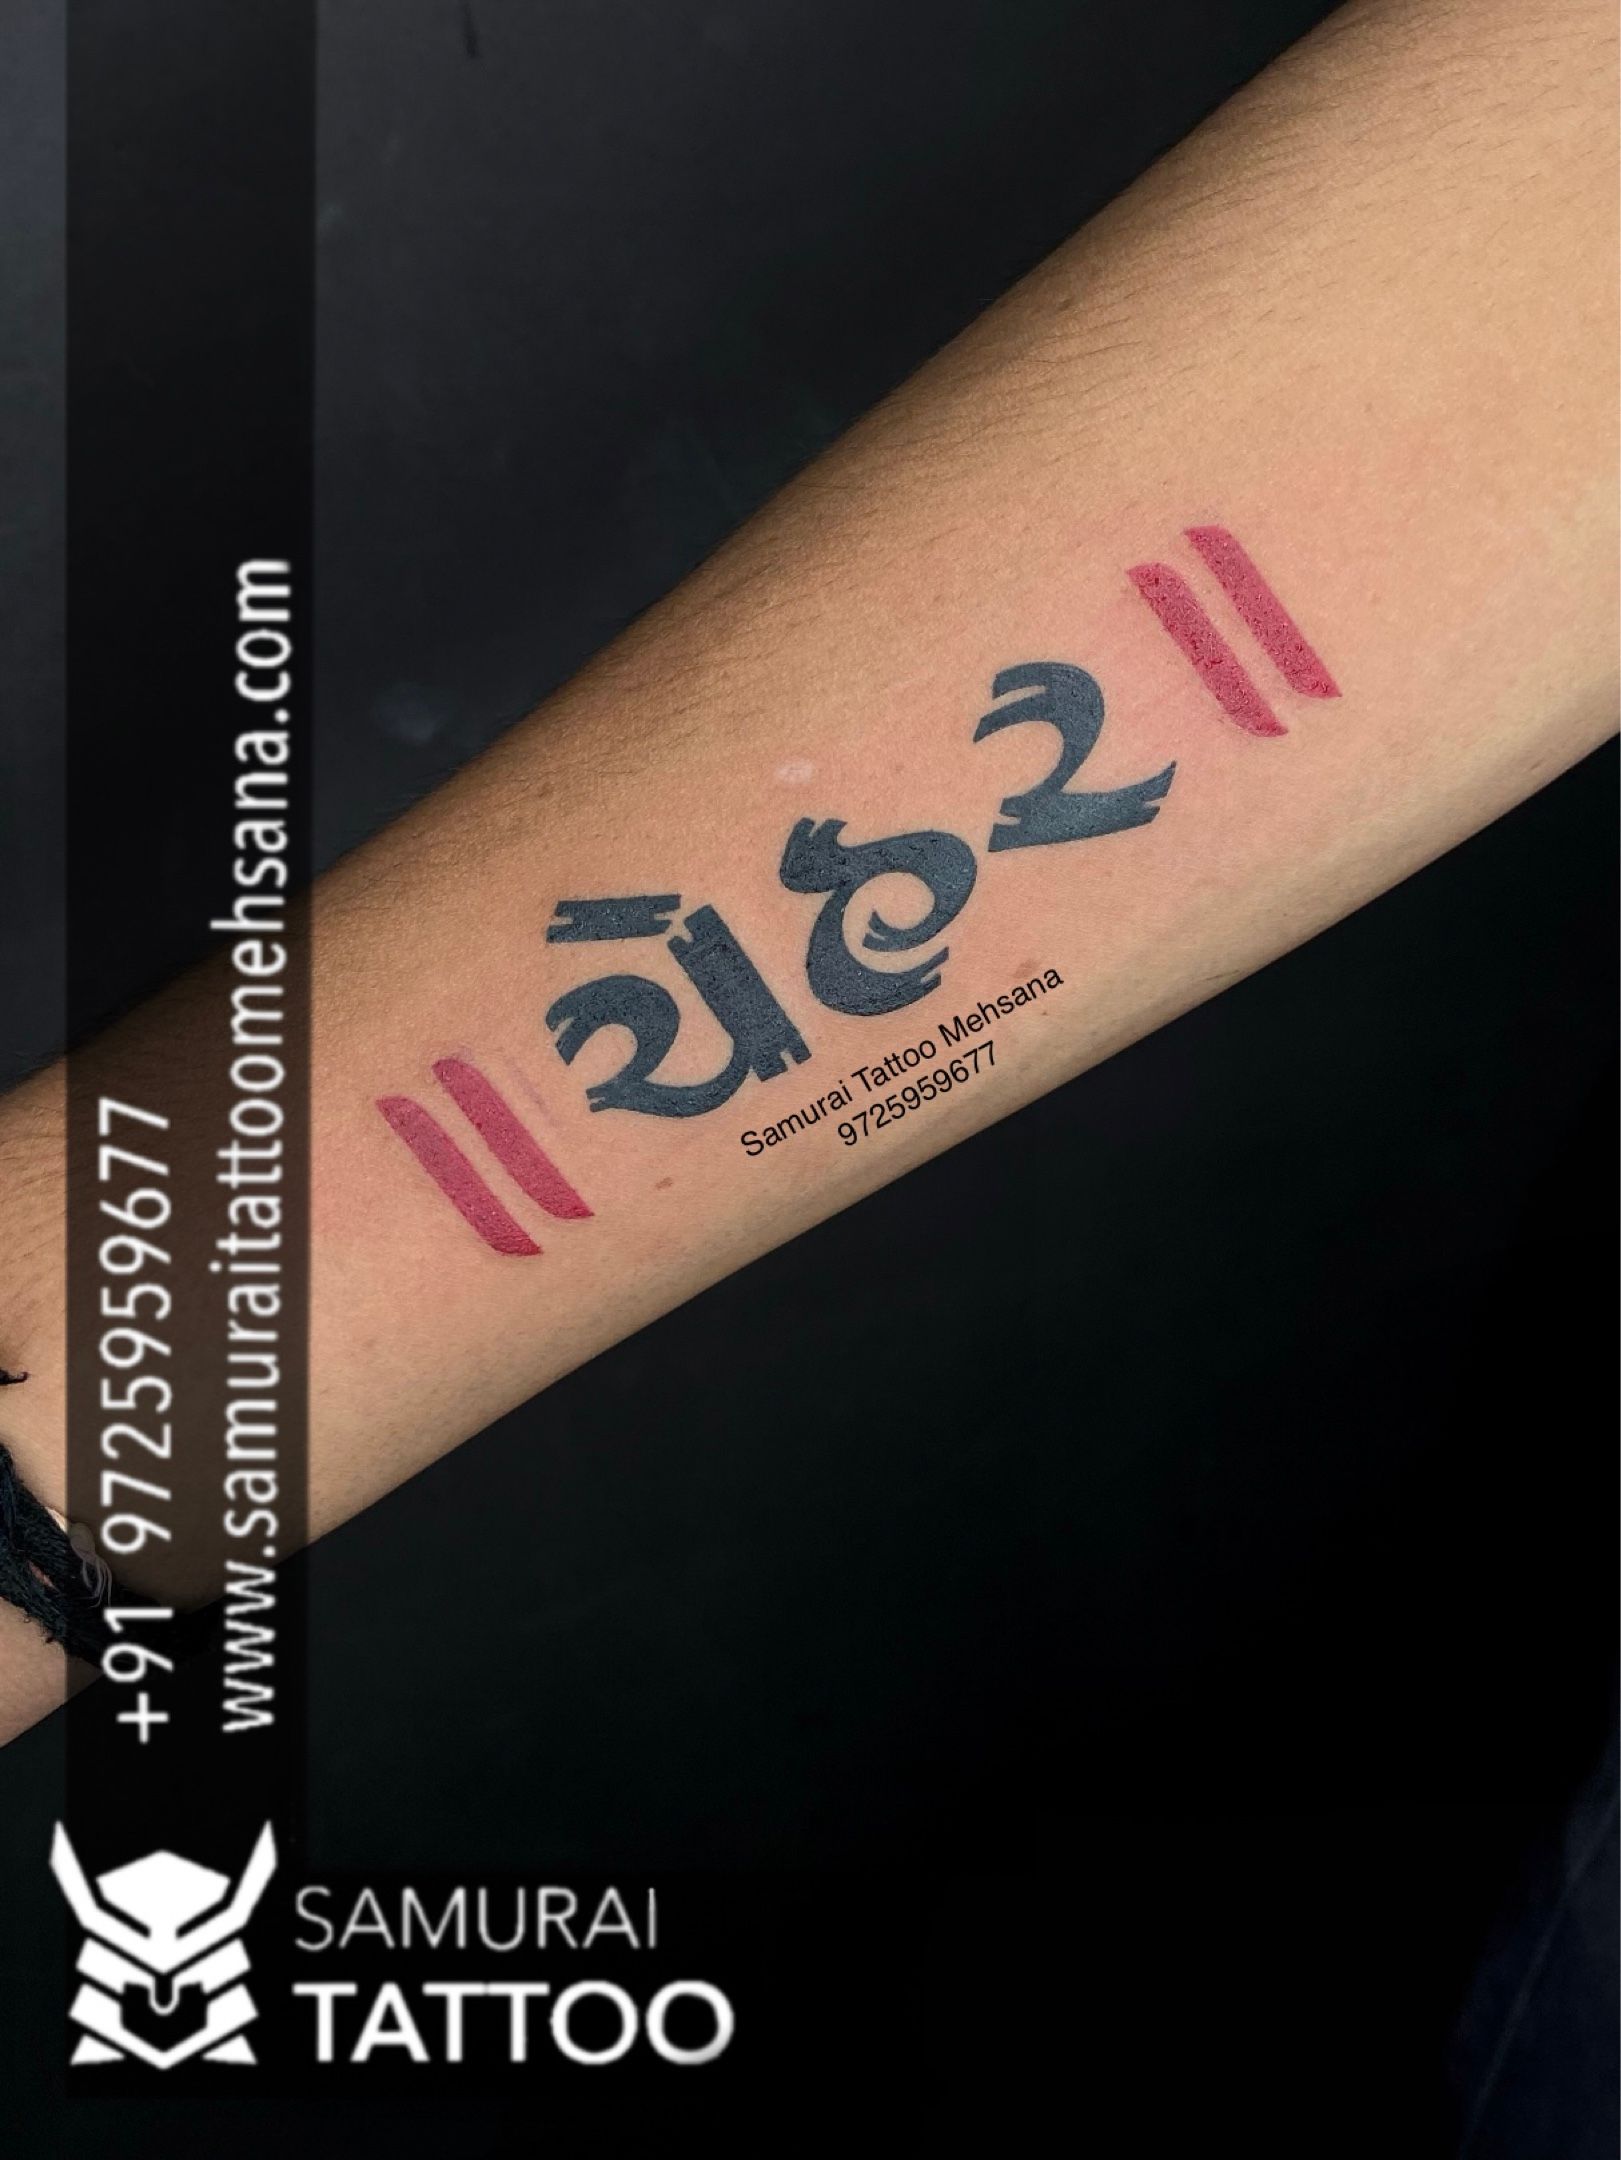 Tattoo uploaded by Vipul Chaudhary • Chehar maa tattoo |Maa chehar tattoo |Chehar  mataji nu tattoo |Chehar tattoo • Tattoodo